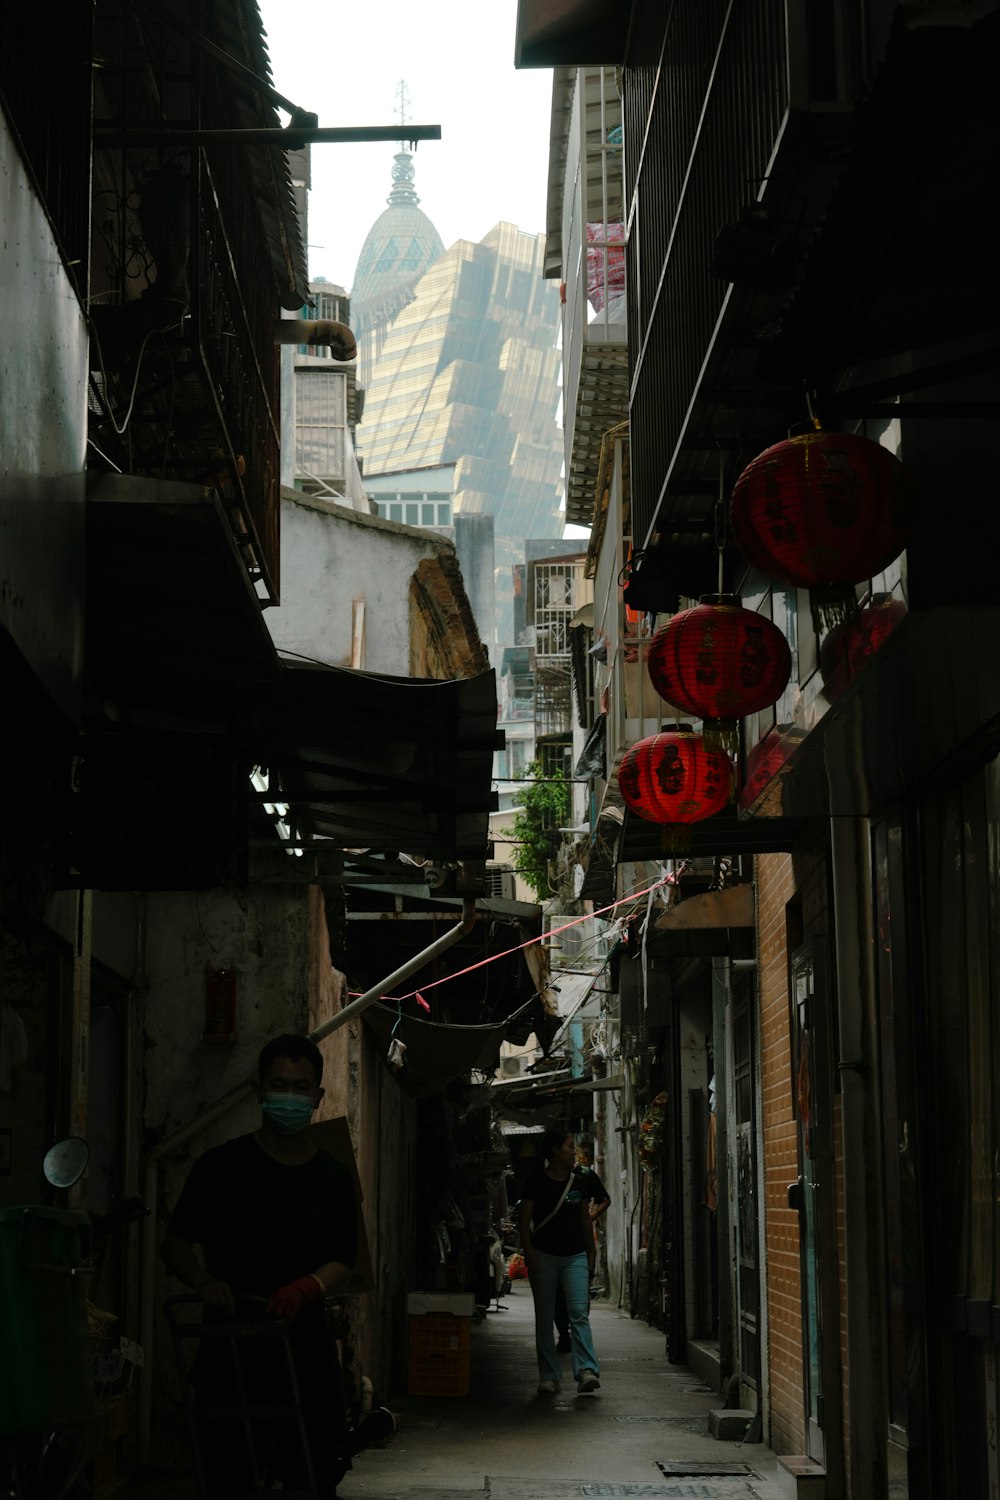 a narrow city street with a few people walking down it